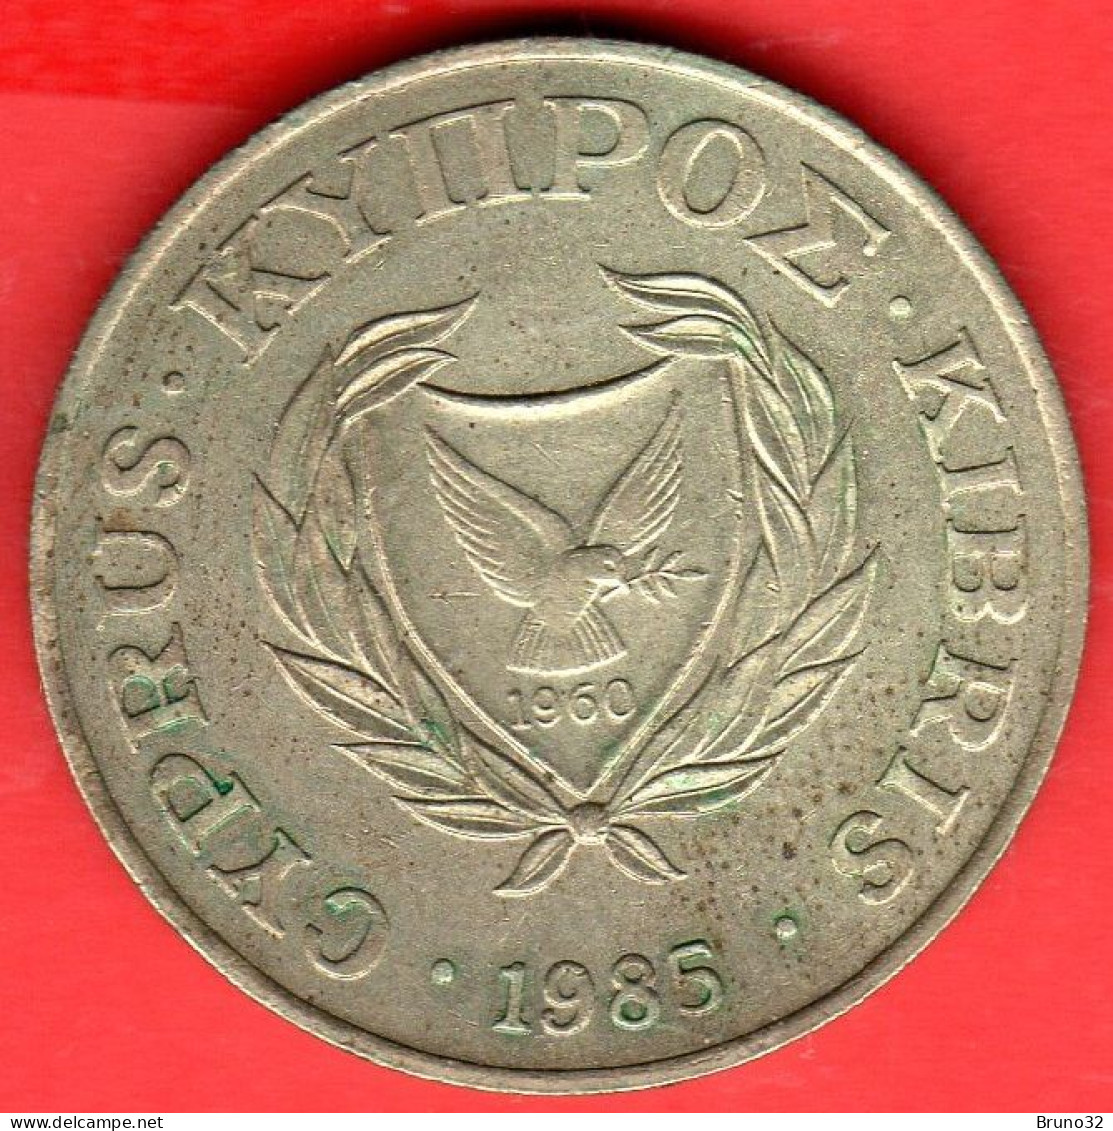 Cipro - Chyprus - Kıbrıs - Chypre - 1985 - 20 Cents - QFDC/aUNC - Come Da Foto - Zypern